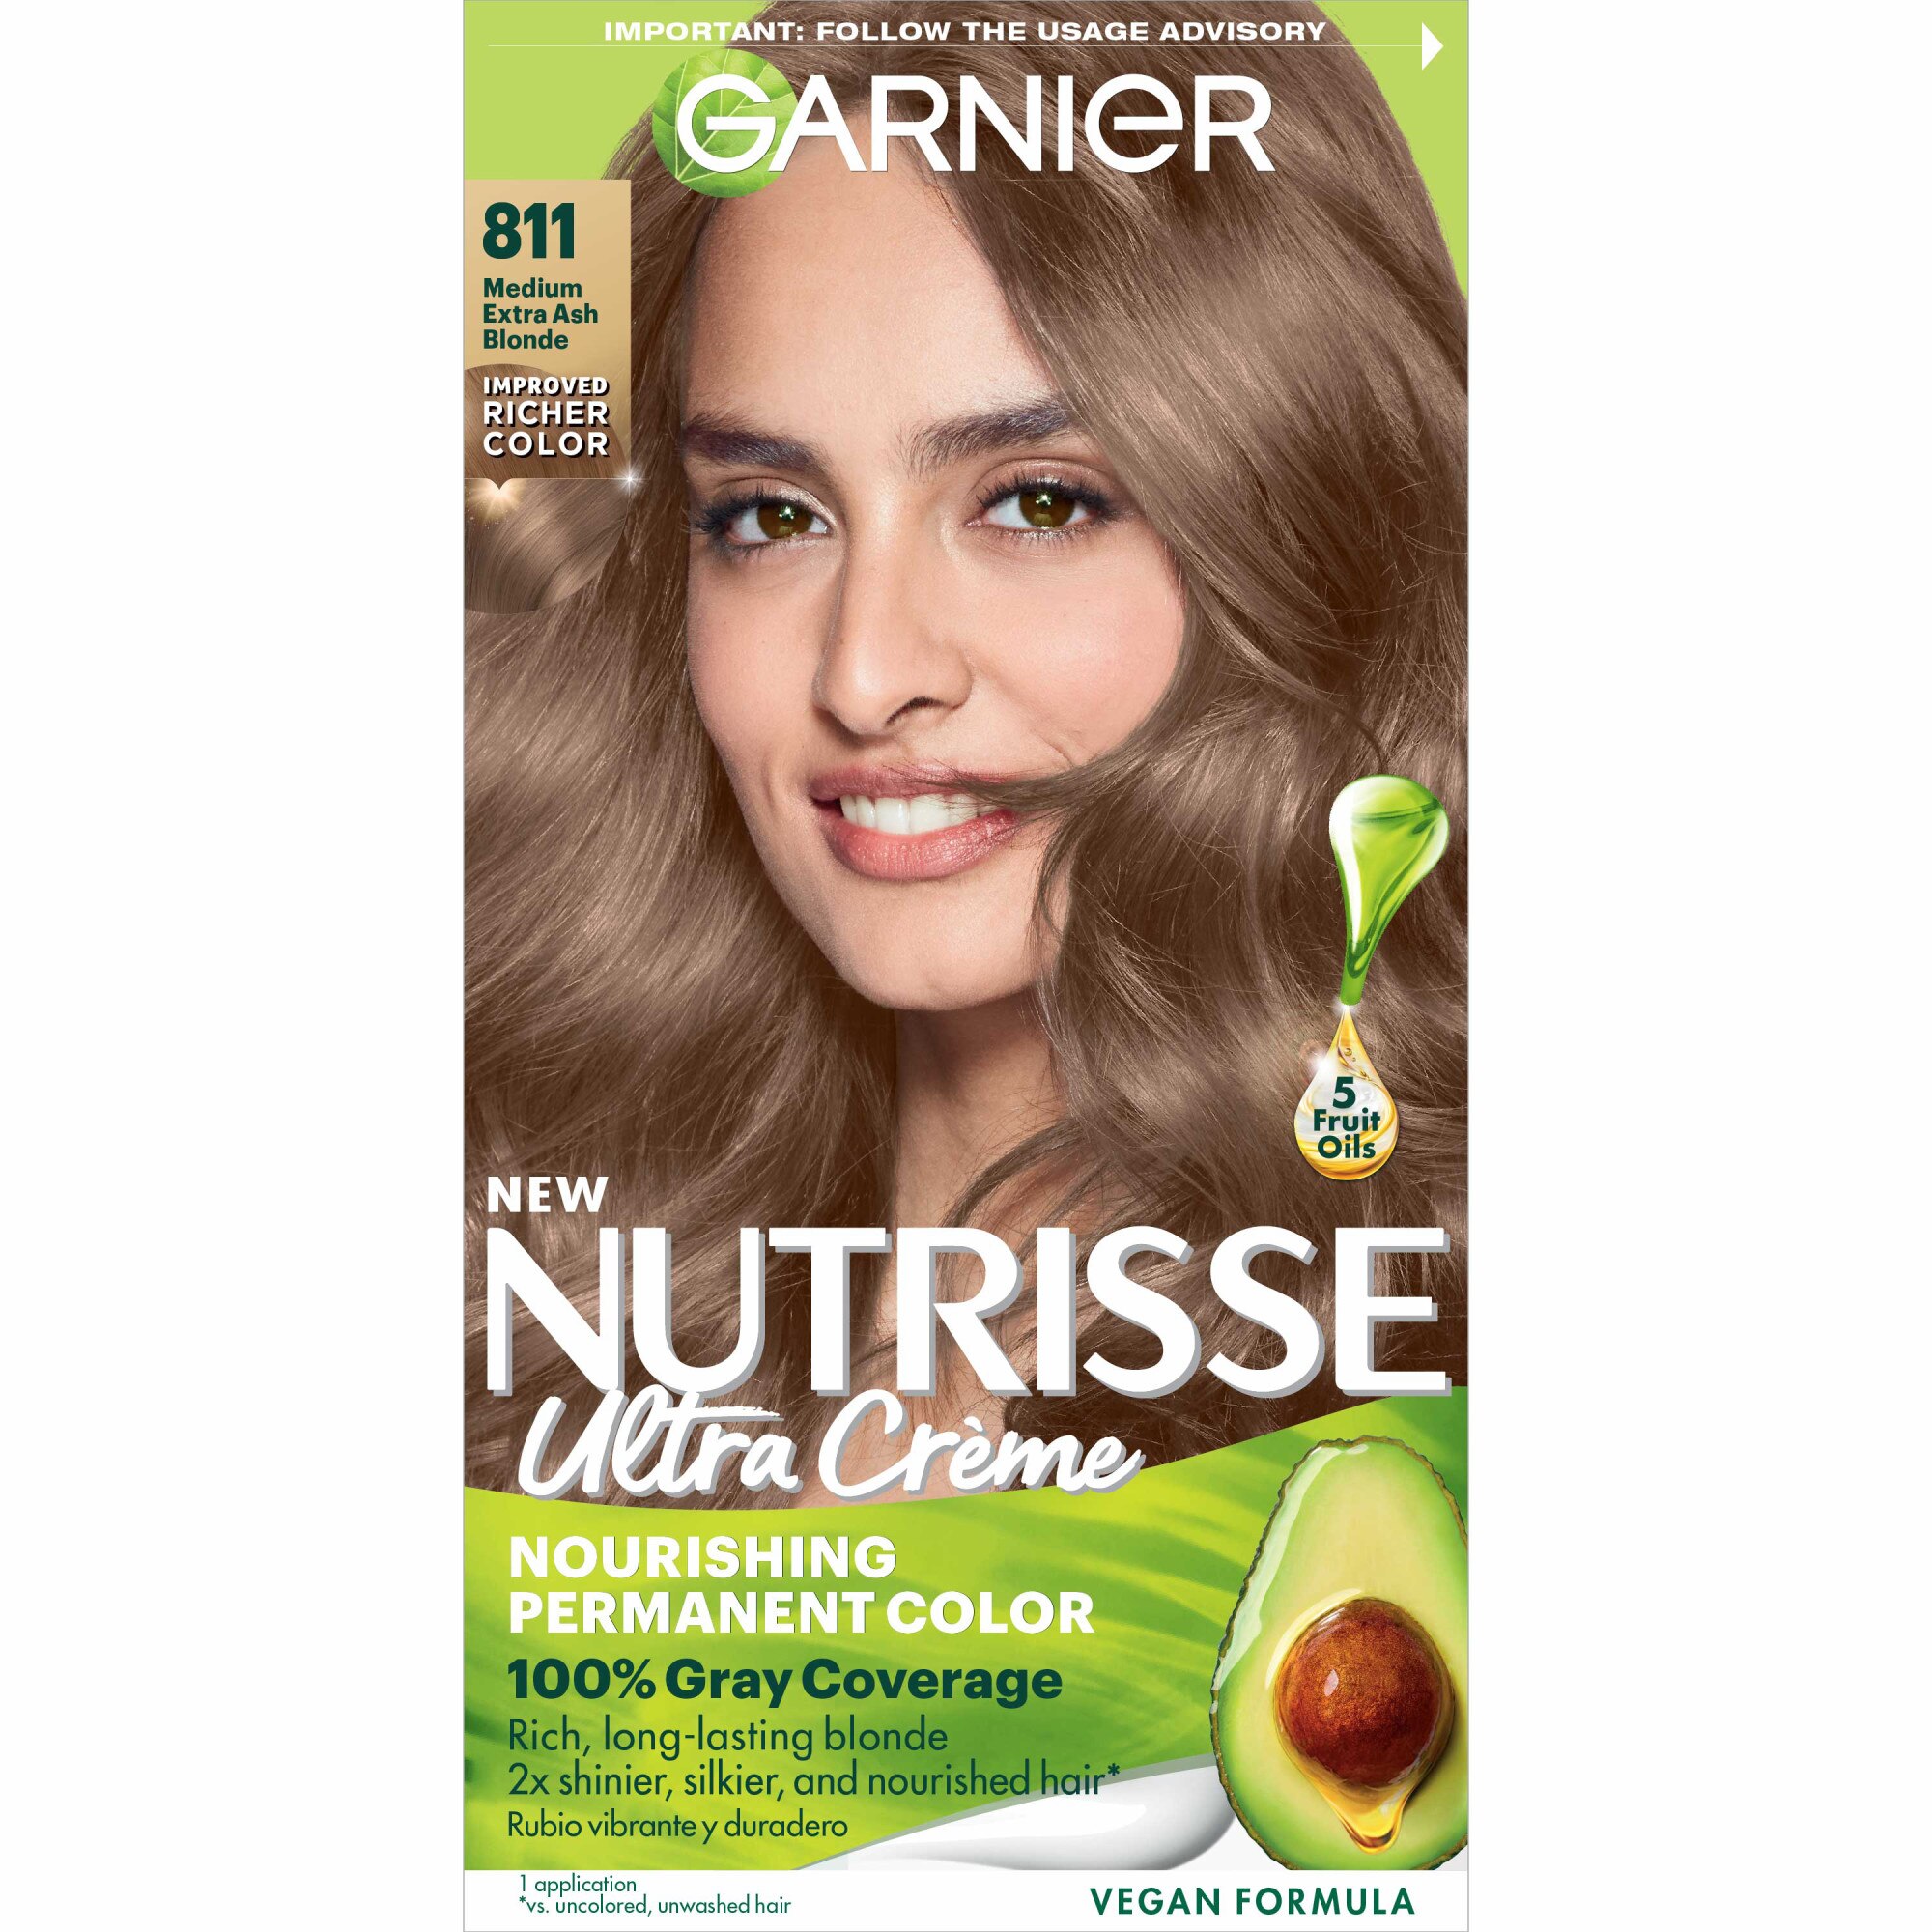 Garnier Nutrisse Ultra Color Nourishing Hair Color Creme, Medium Extra Ash Blonde , CVS